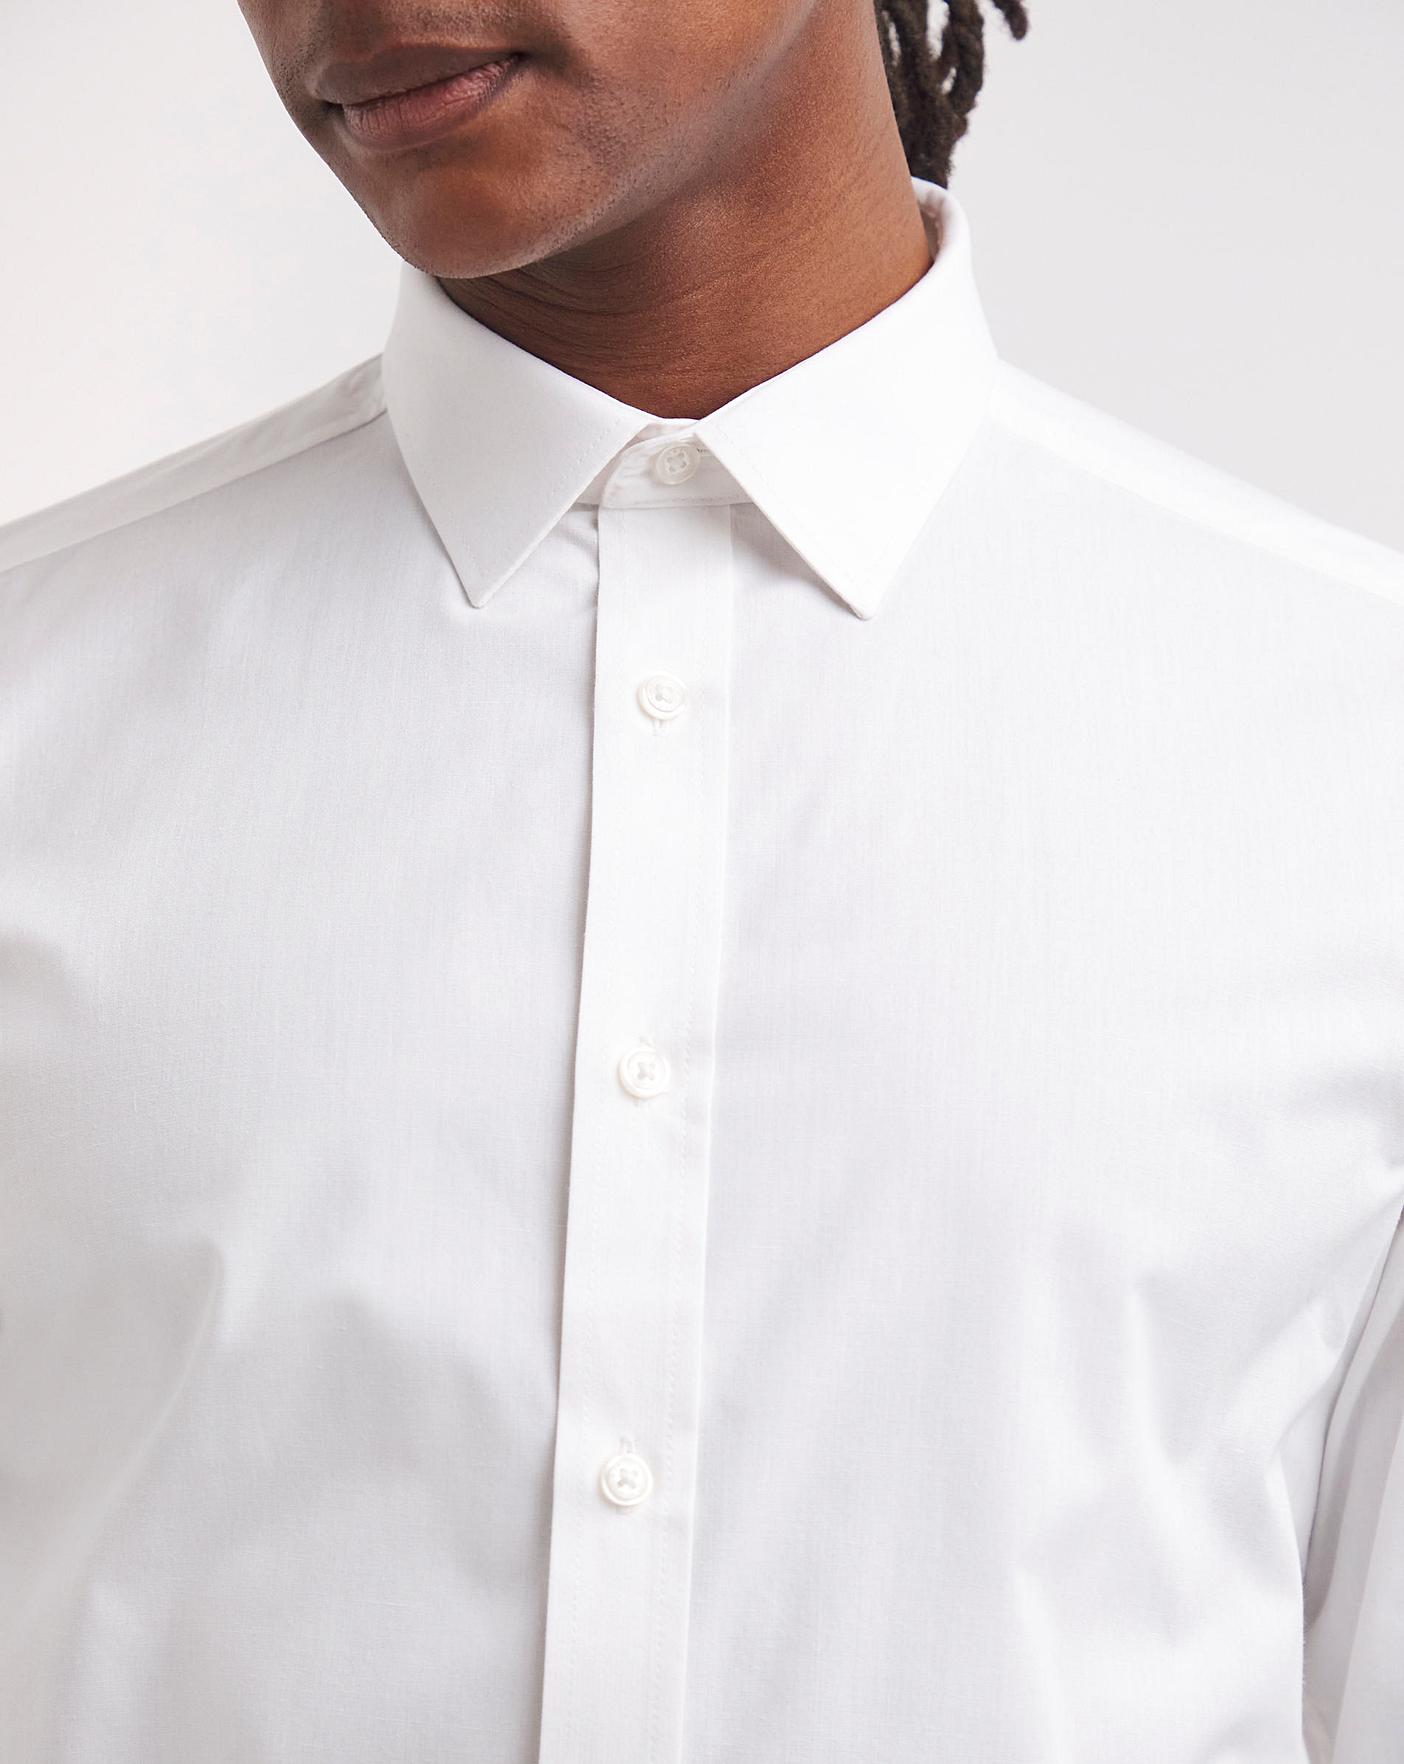 Jacamo Premium Formal Poplin Shirt | Premier Man